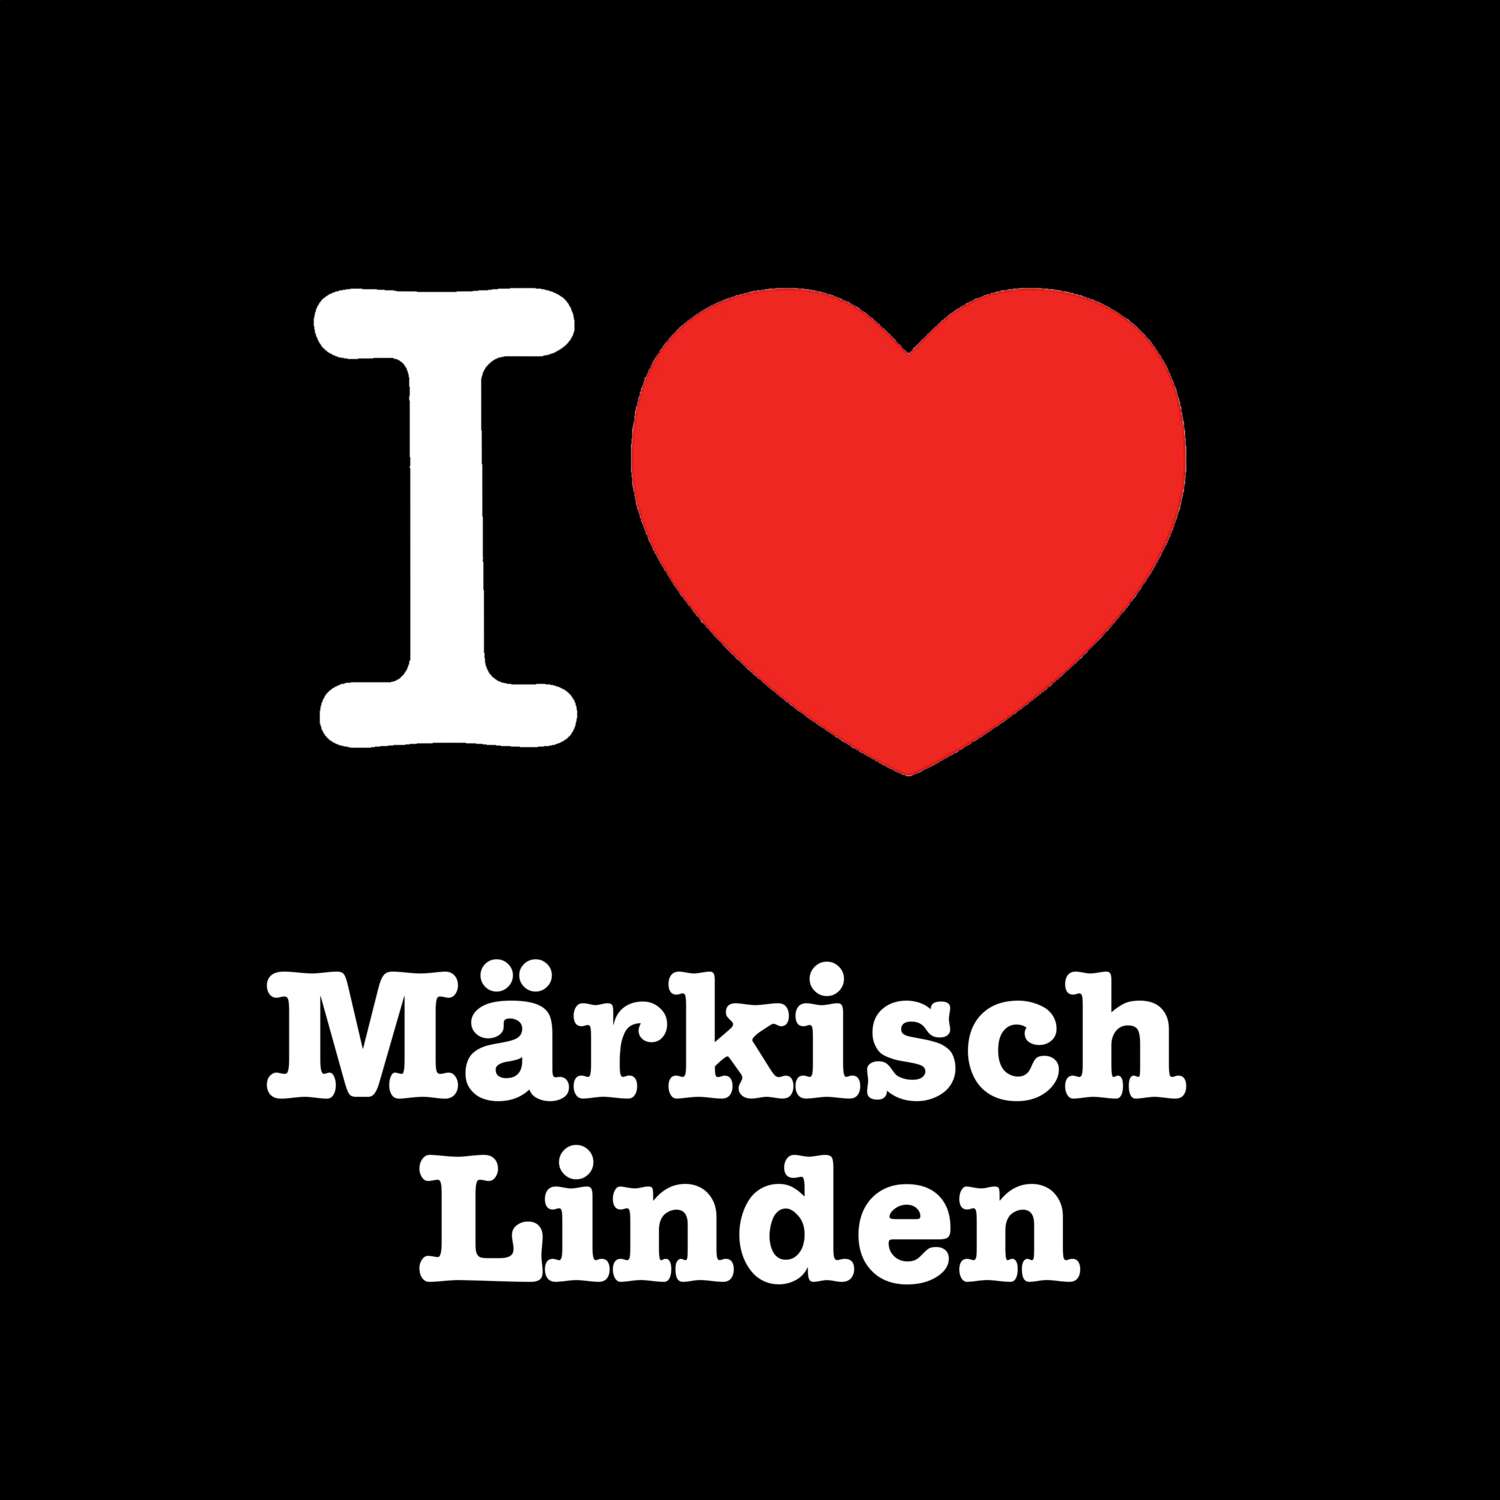 Märkisch Linden T-Shirt »I love«